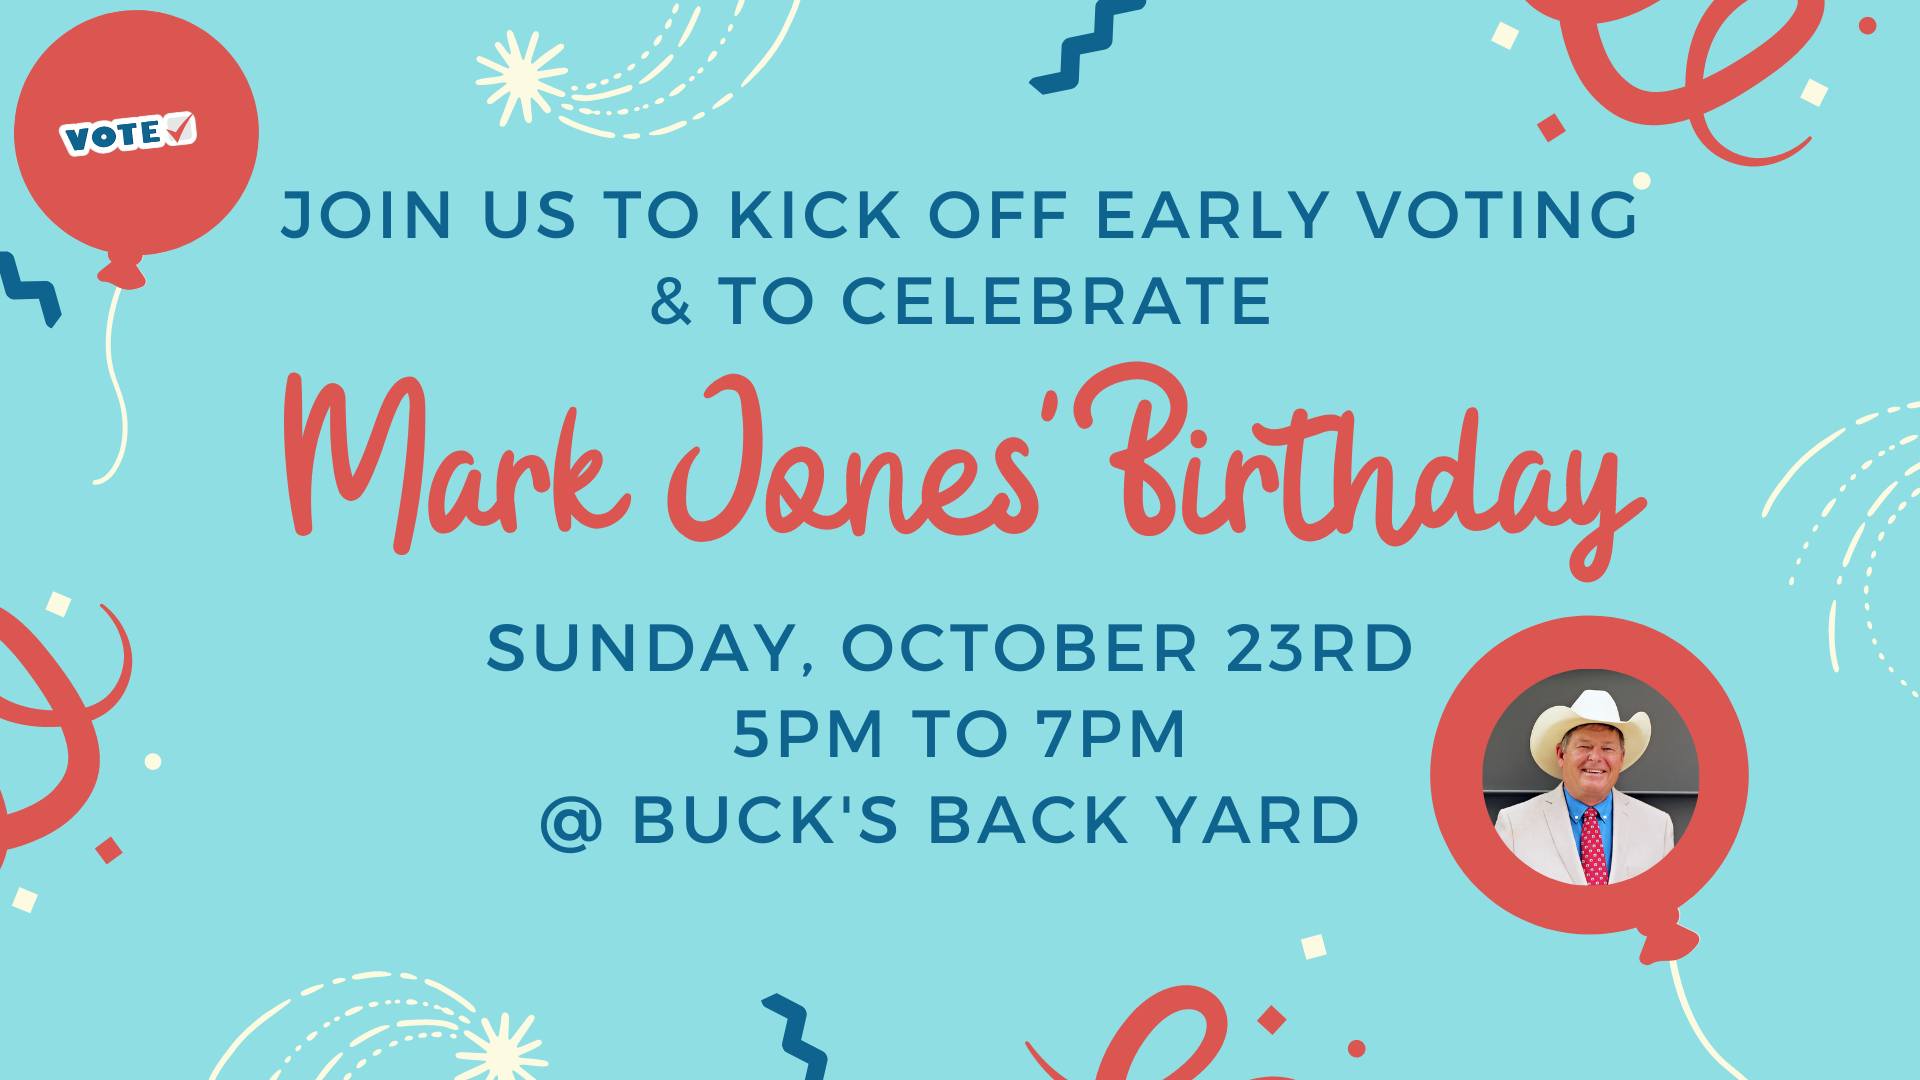 Mark Jones Birthday & Early Voting Kickoff